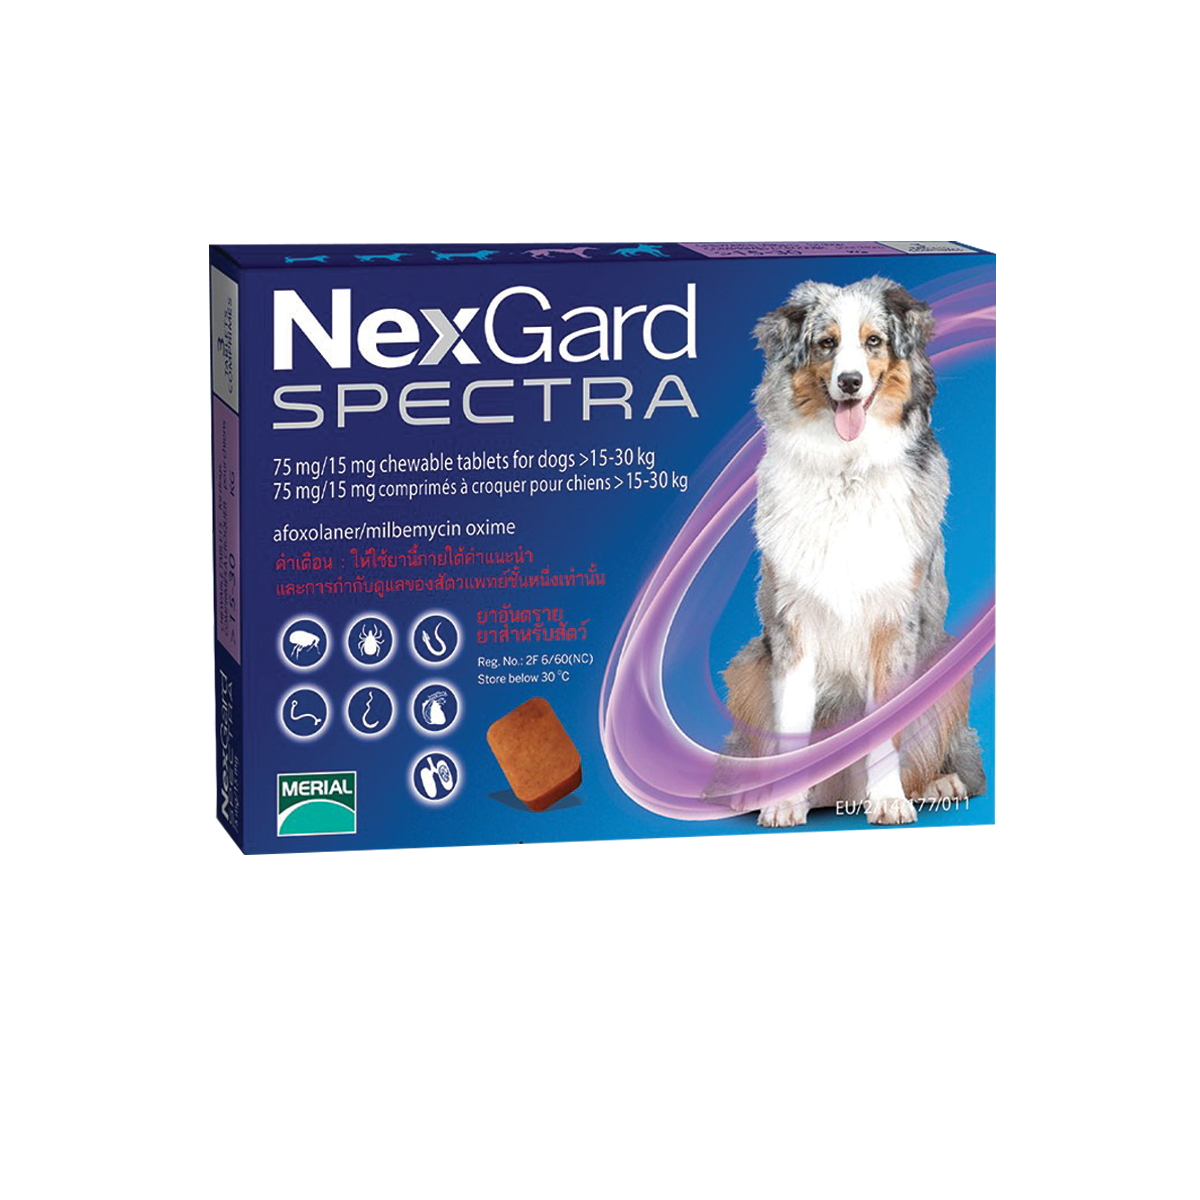 NexGard Spectra Chewable Tablets For Large Dogs เน็กการ์ด สเป็คต้าร์ ยากำจัดเห็บ หมัด สุนัข ชนิดเม็ดเคี้ยว สำหรับสุนัขที่มีน้ำหนัก 15-30 กิโลกรัม